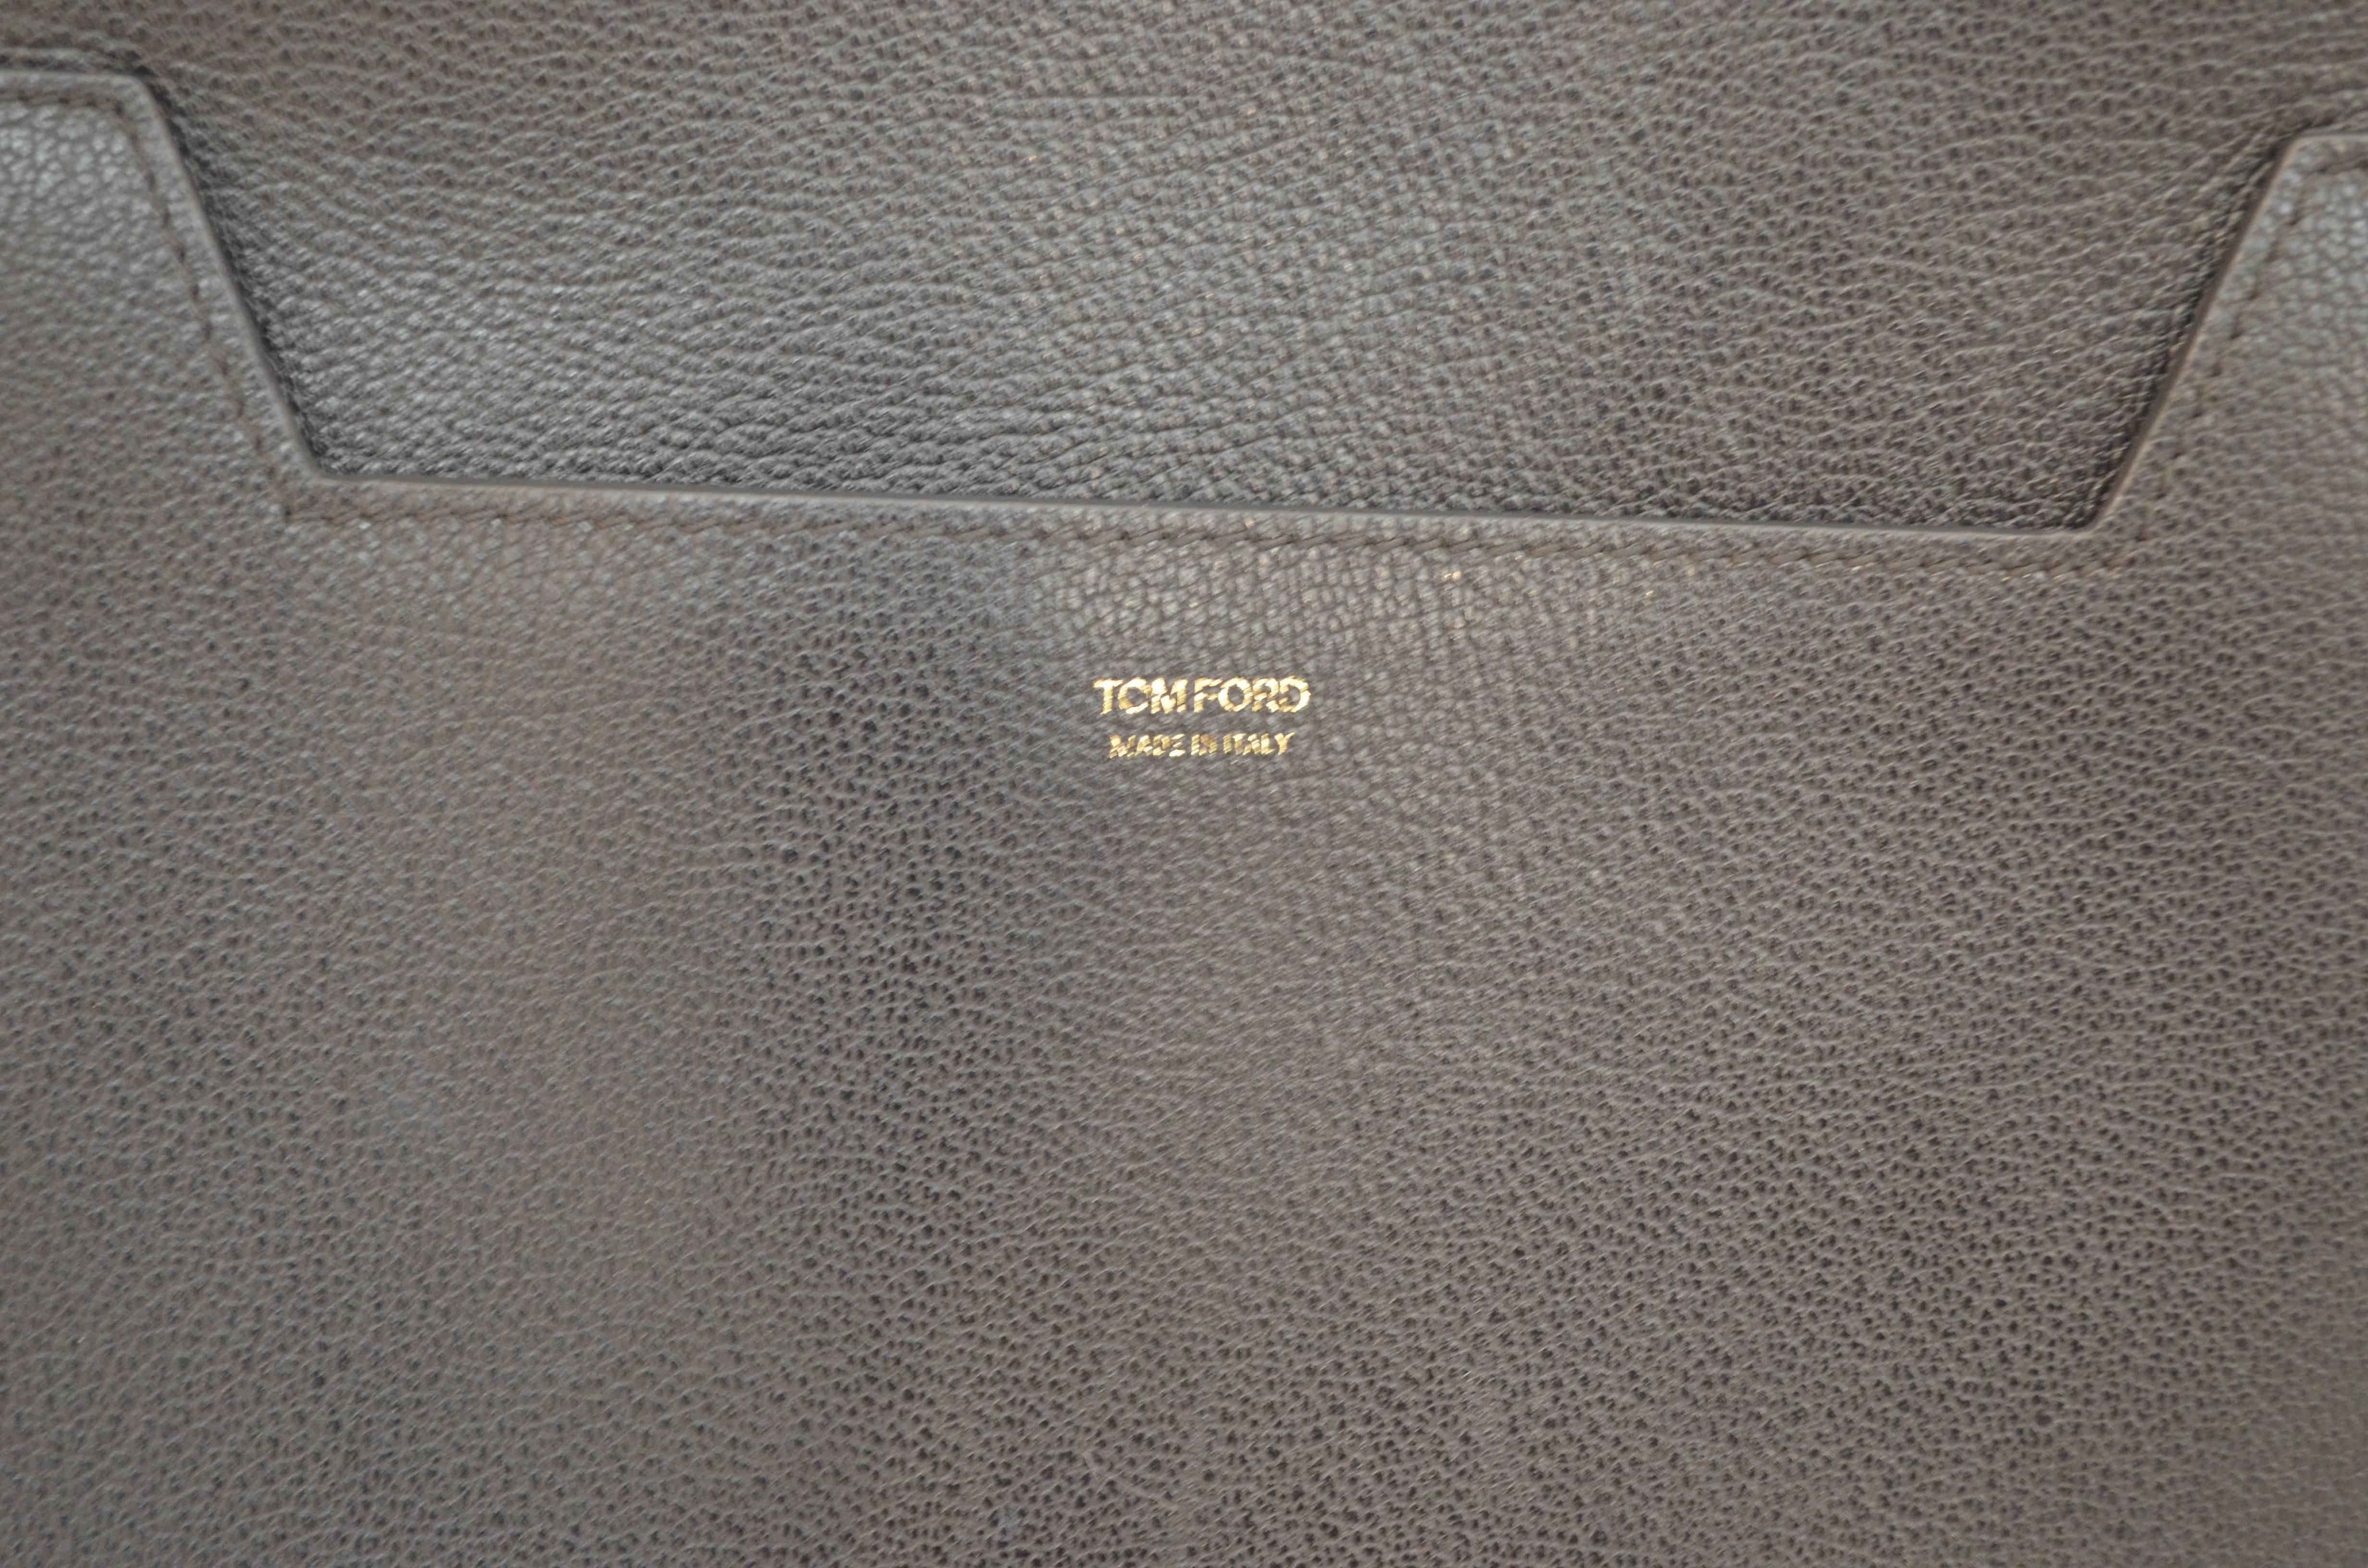 Women's Tom Ford Black Large Leather Jennifer Bag